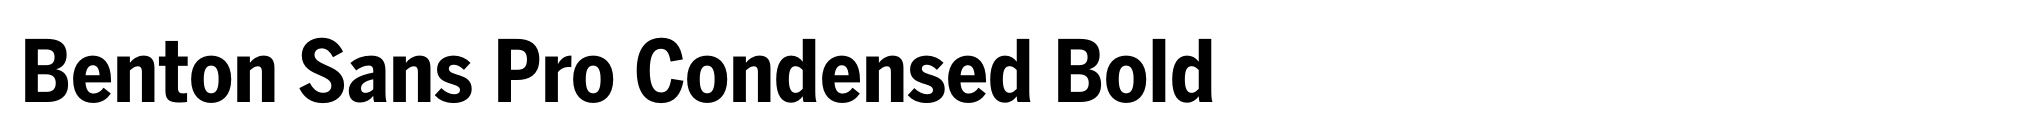 Benton Sans Pro Condensed Bold image